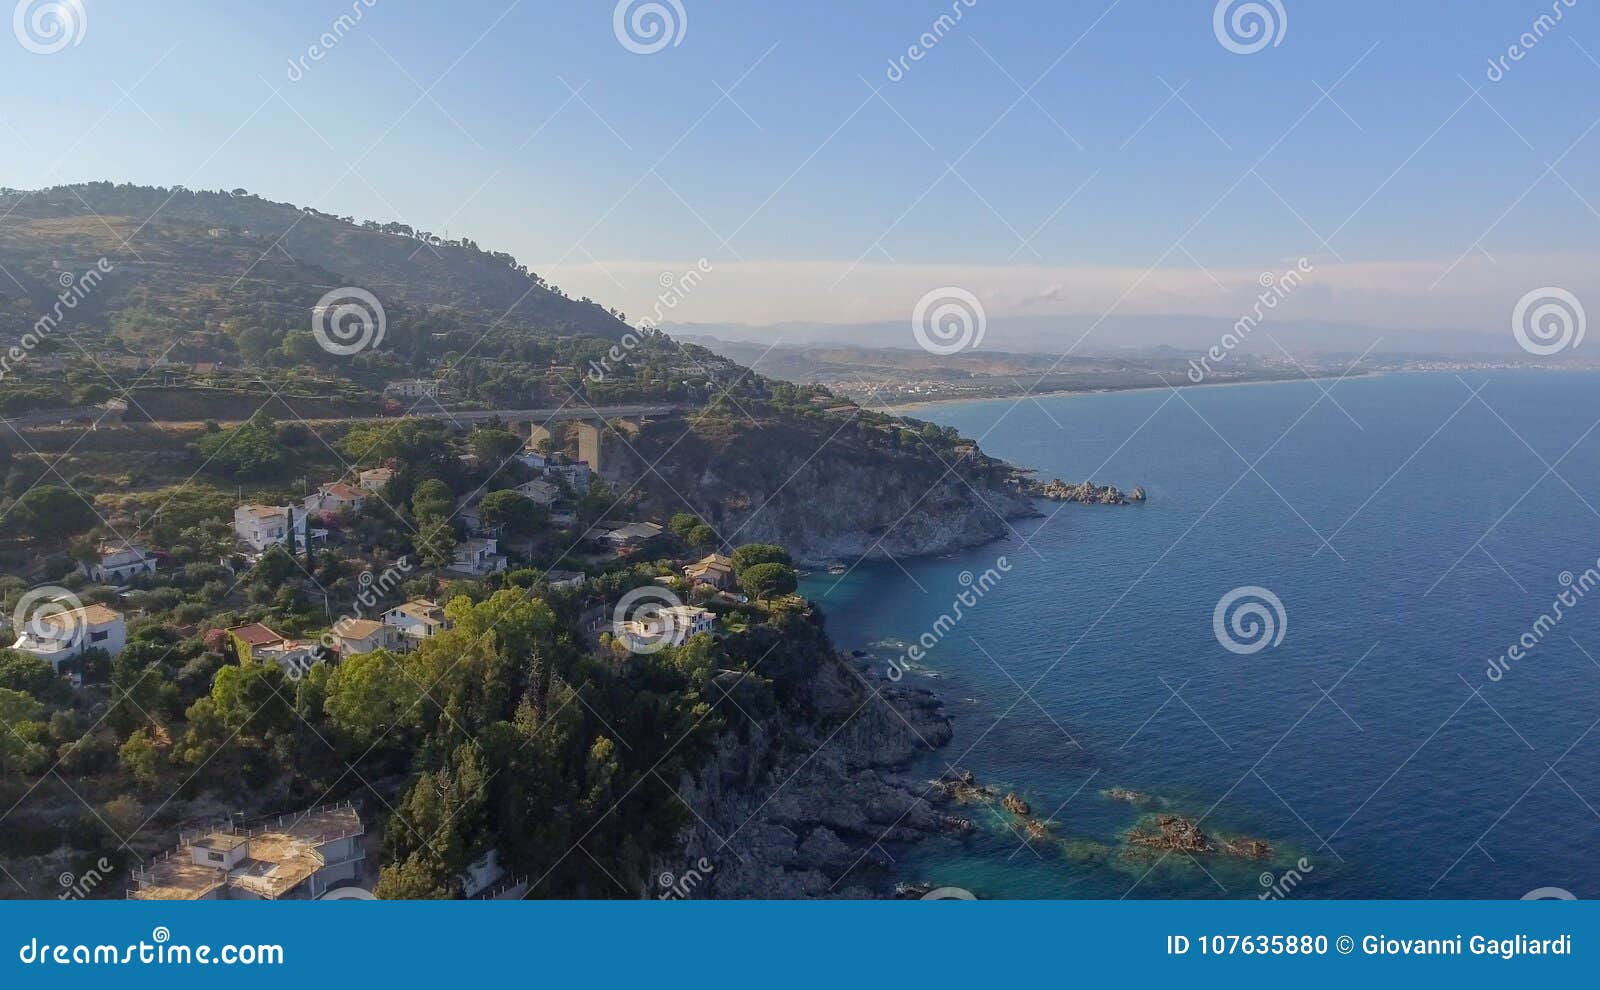 beautiful coast of camina, calabria aerial view